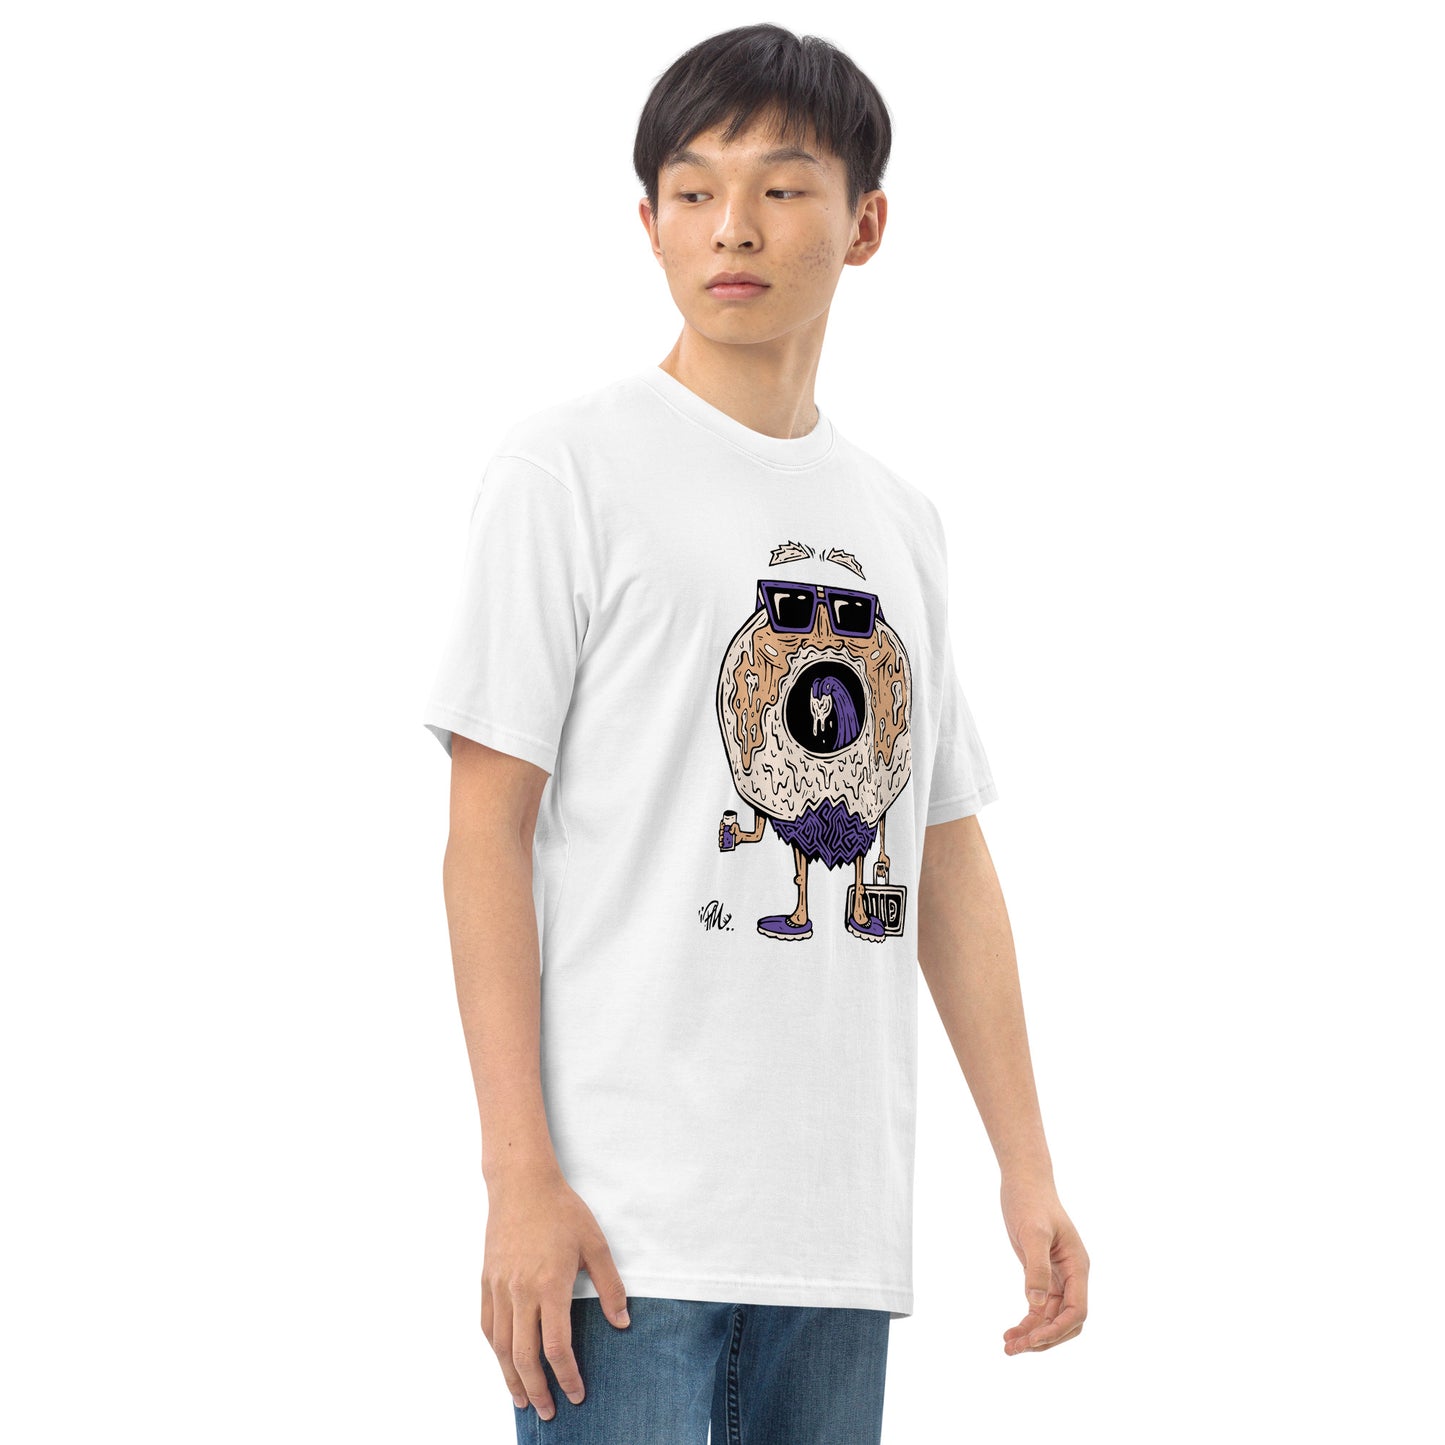 Donald Donut - Grape Jelly T-Shirt